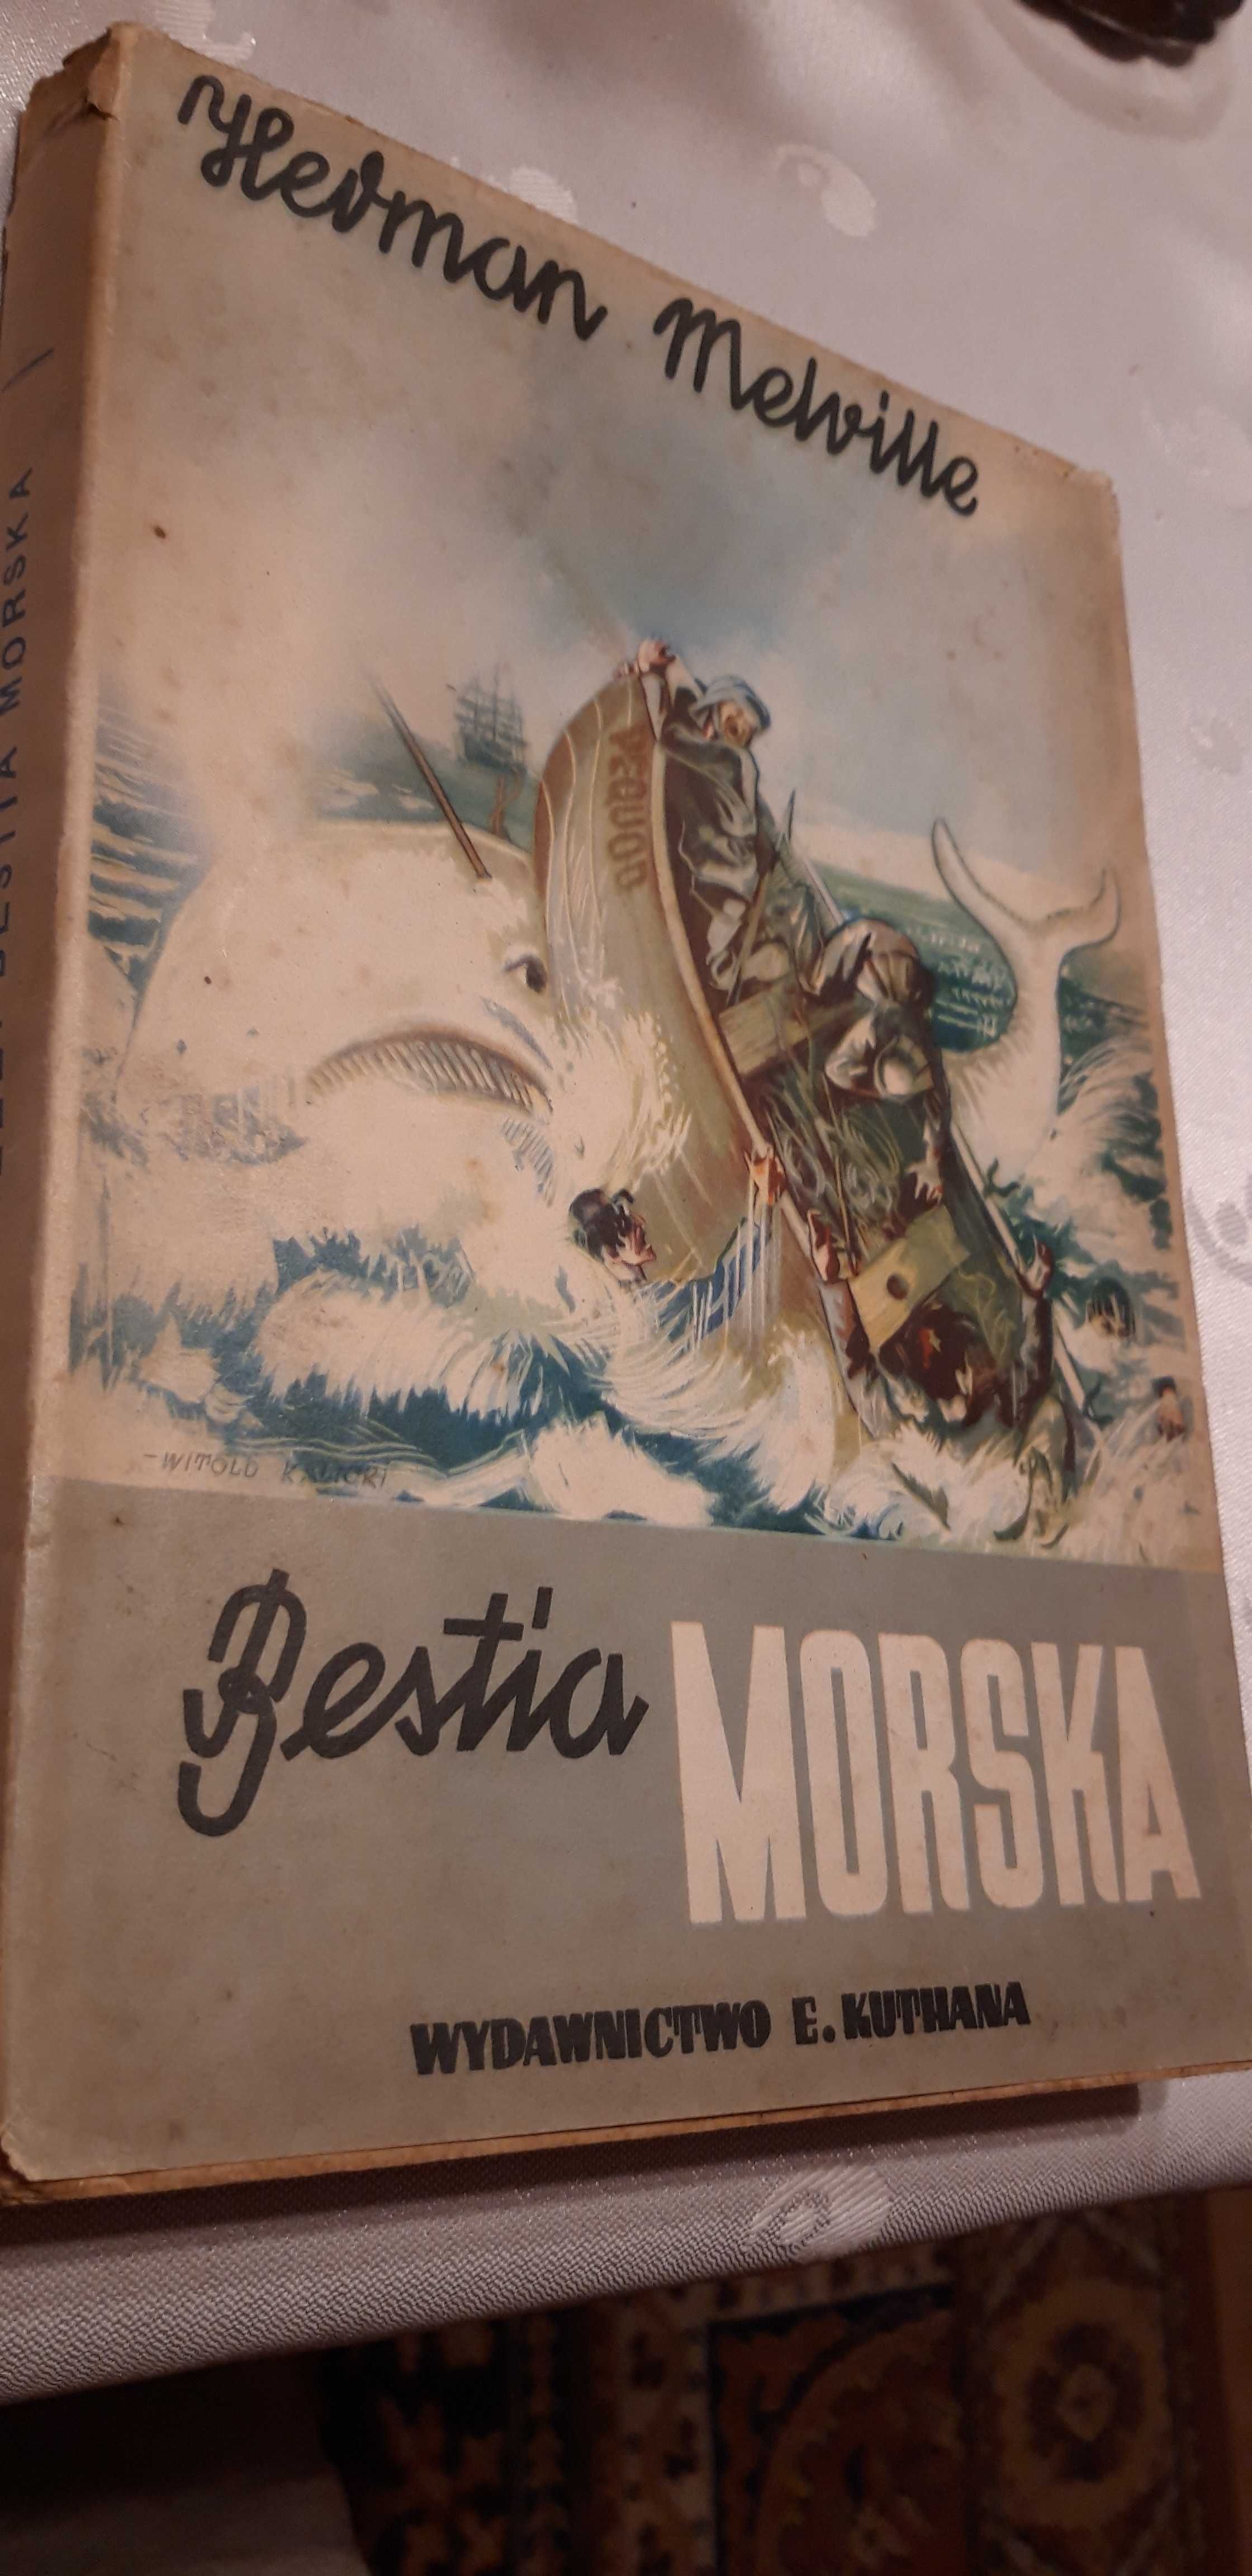 Bestia  Morska (Moby Dick)-H. Melville- Wyd.Kuthana1948,bdb stan